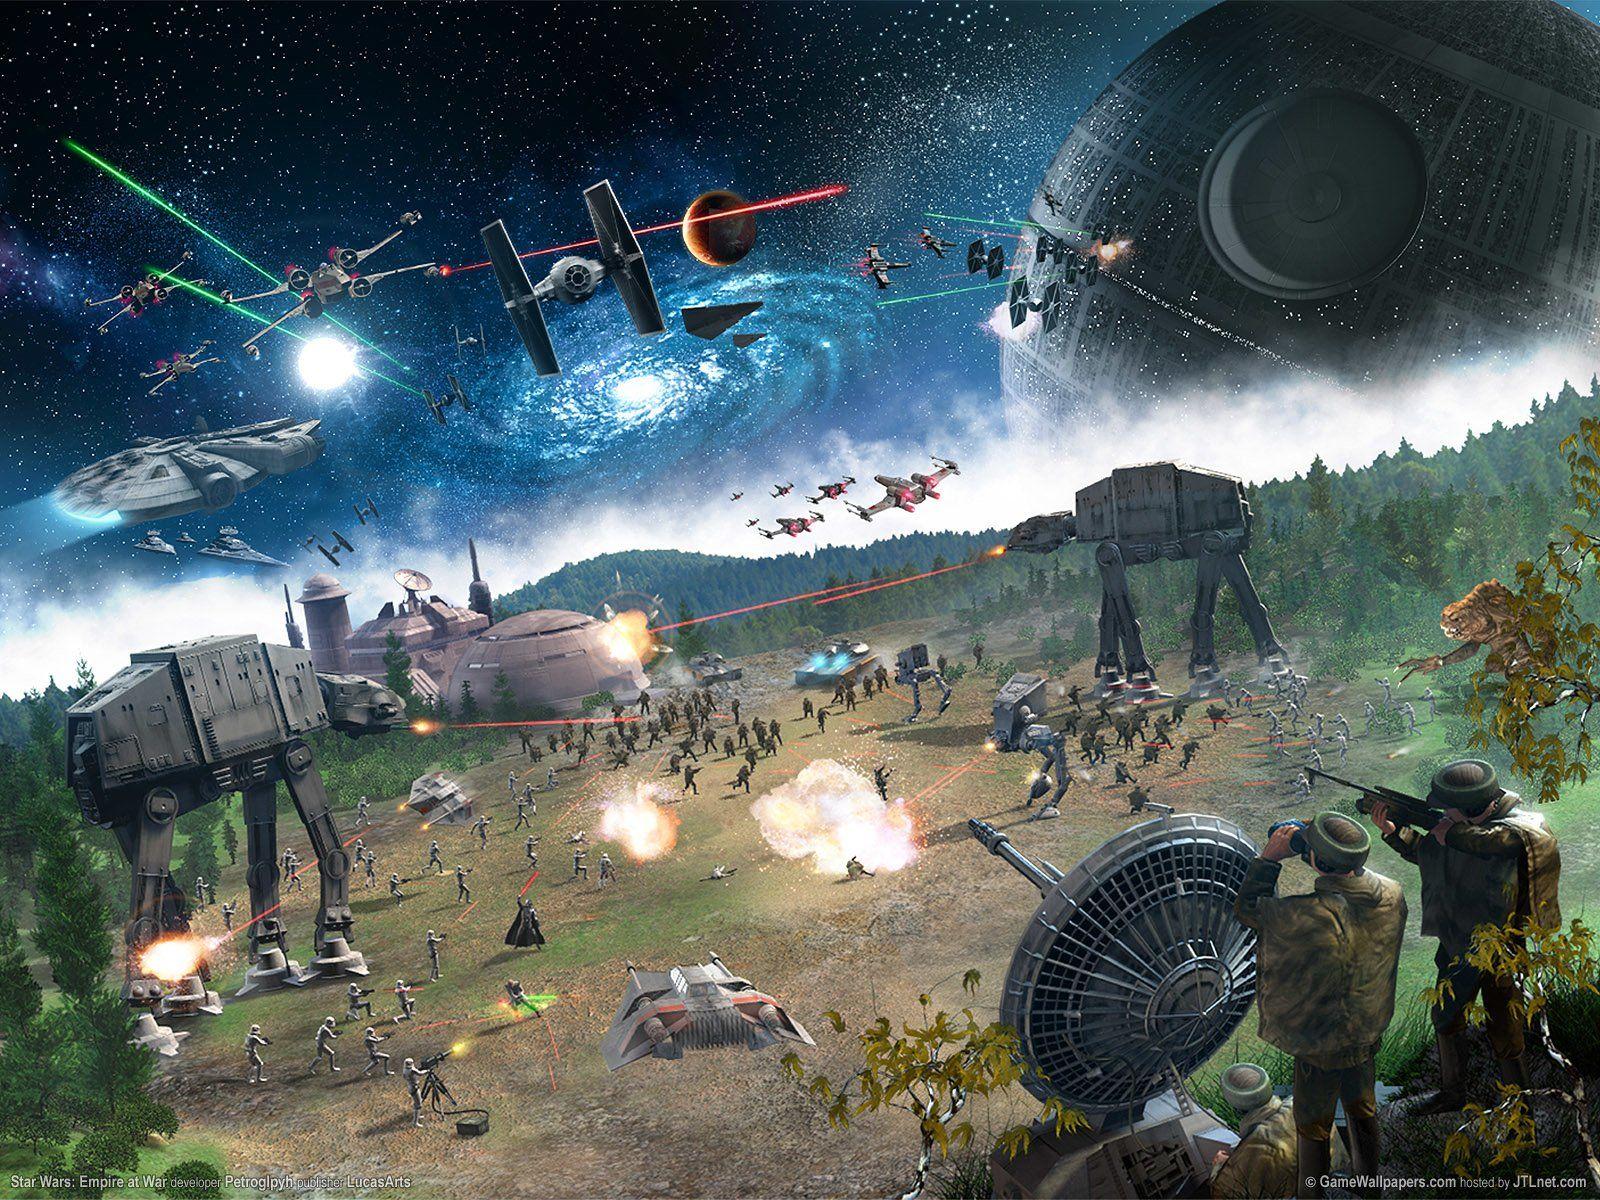 Star Wars Battle Scene Wallpaper and Background Imagex1200